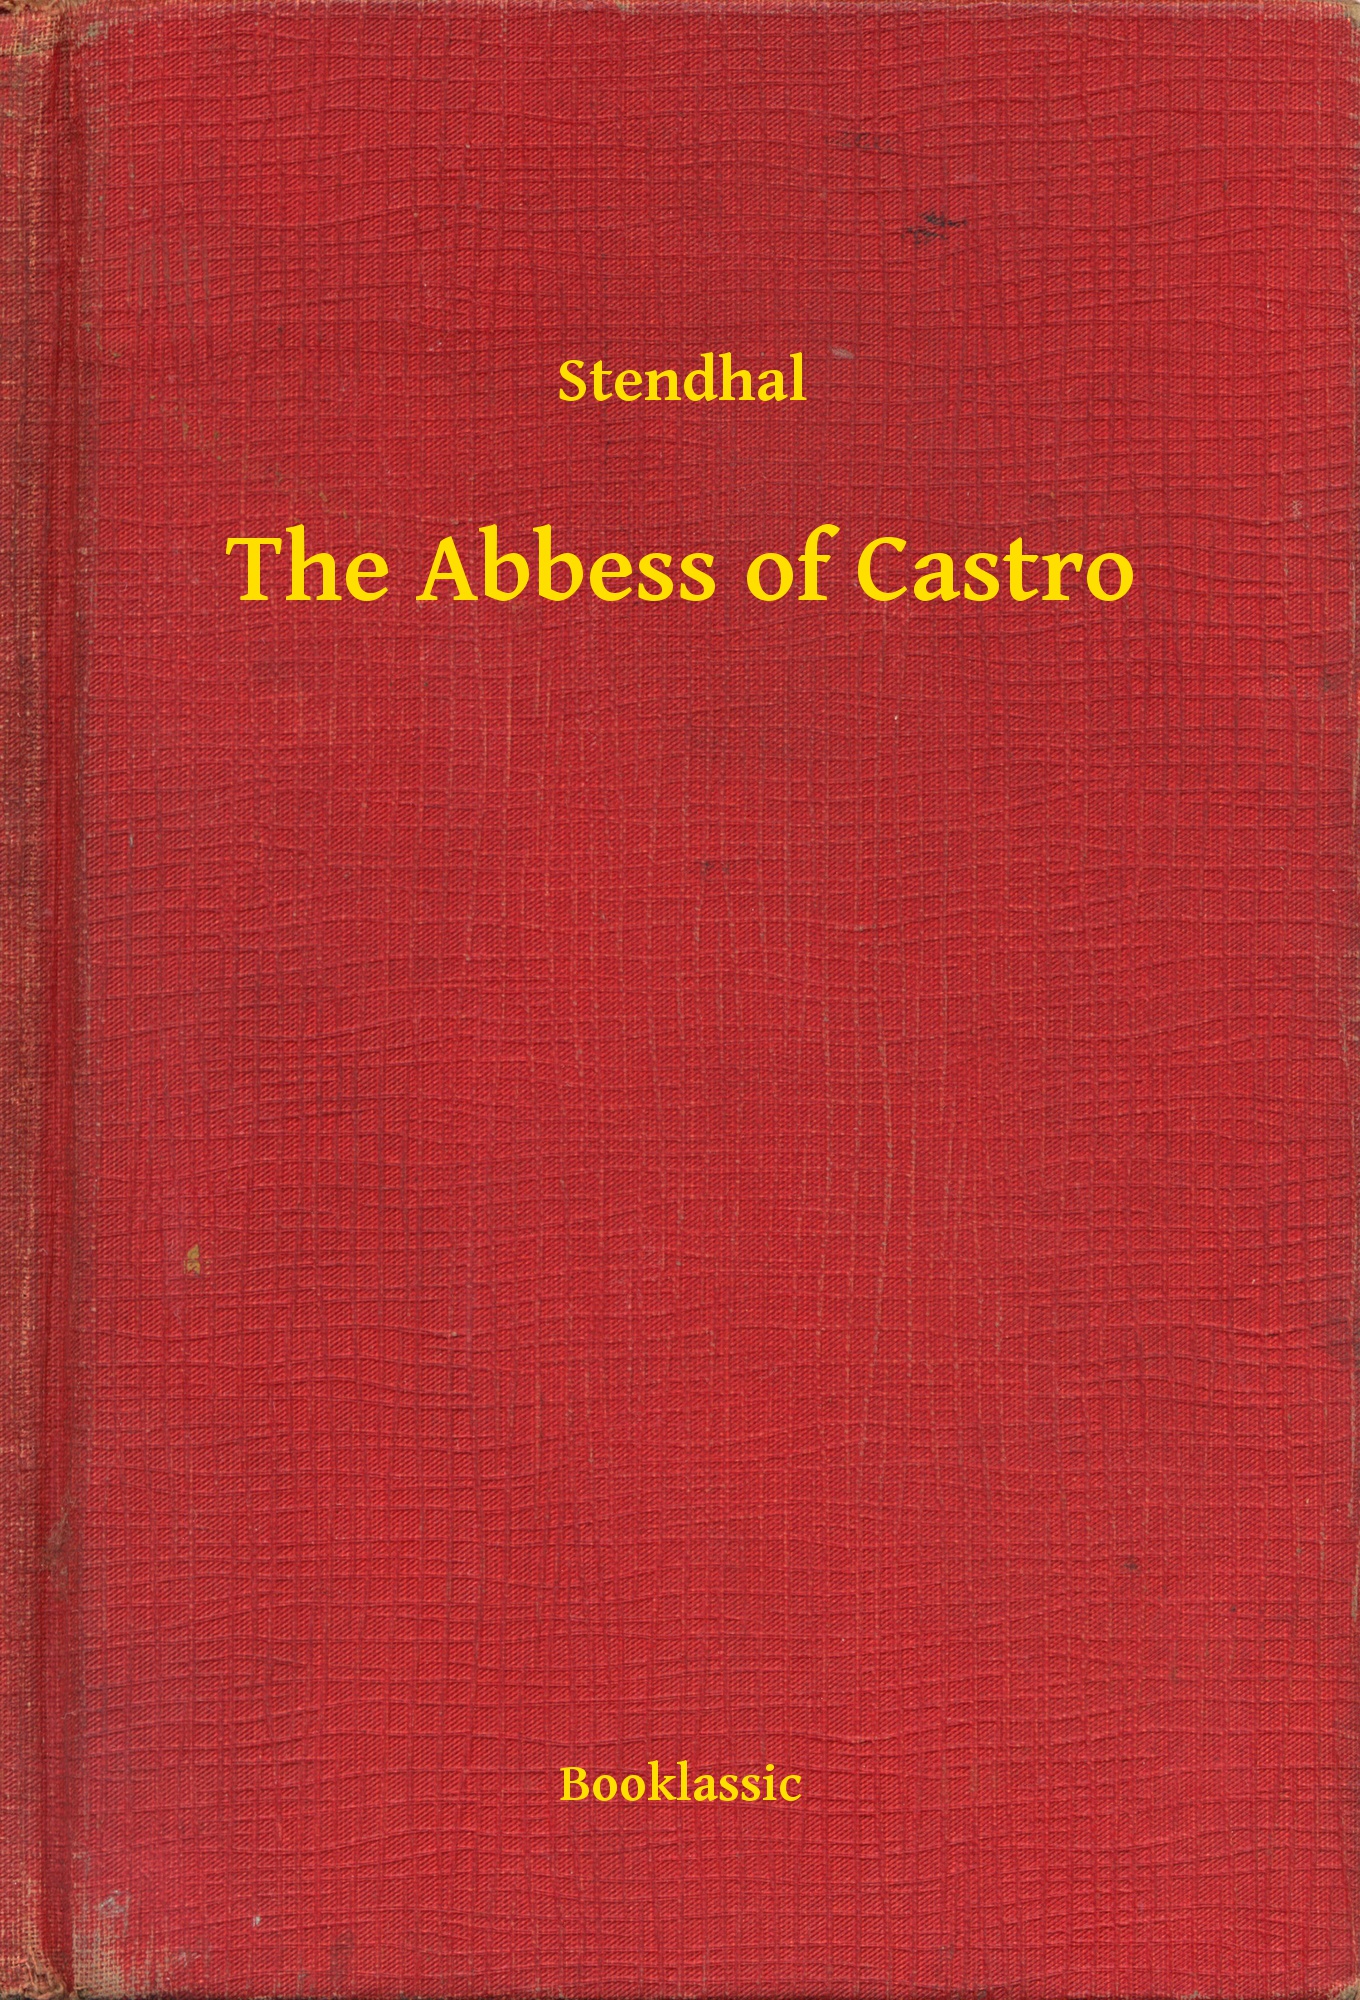 The Abbess of Castro